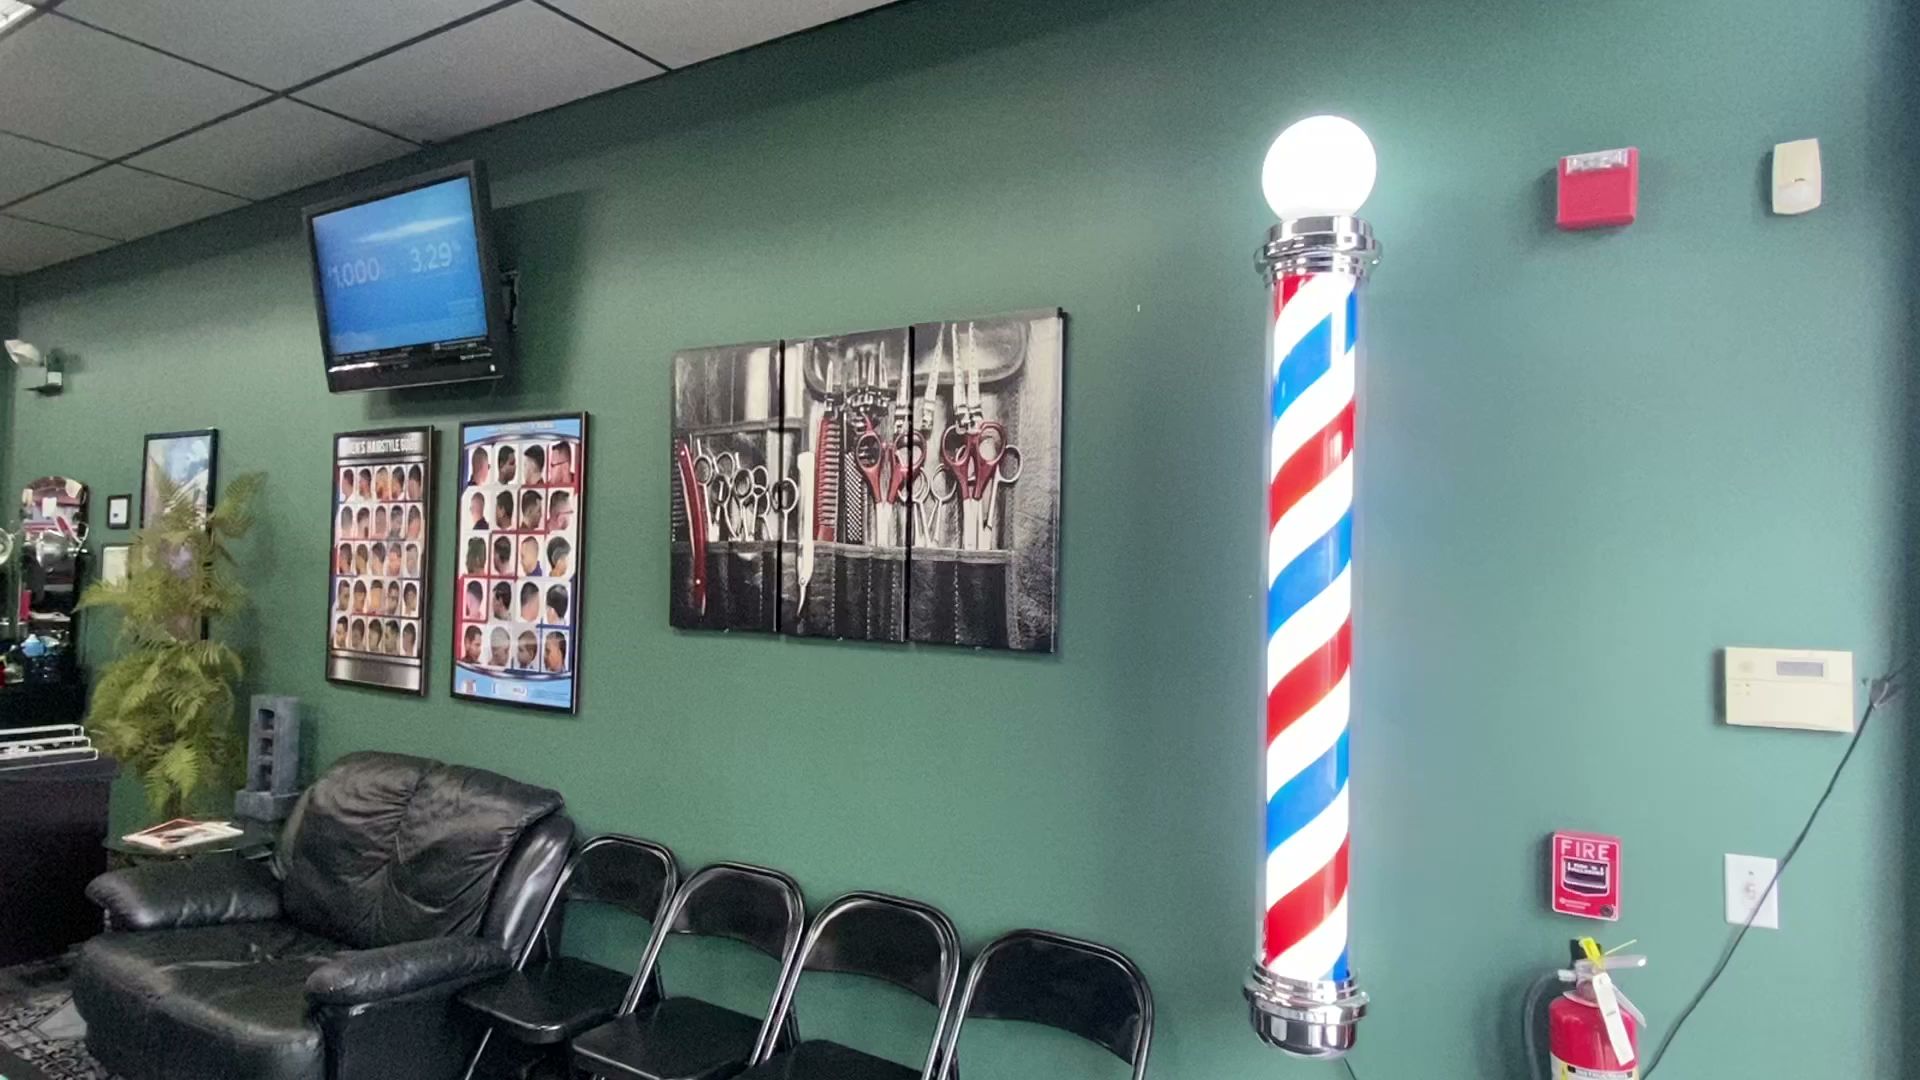 Barber Lounge